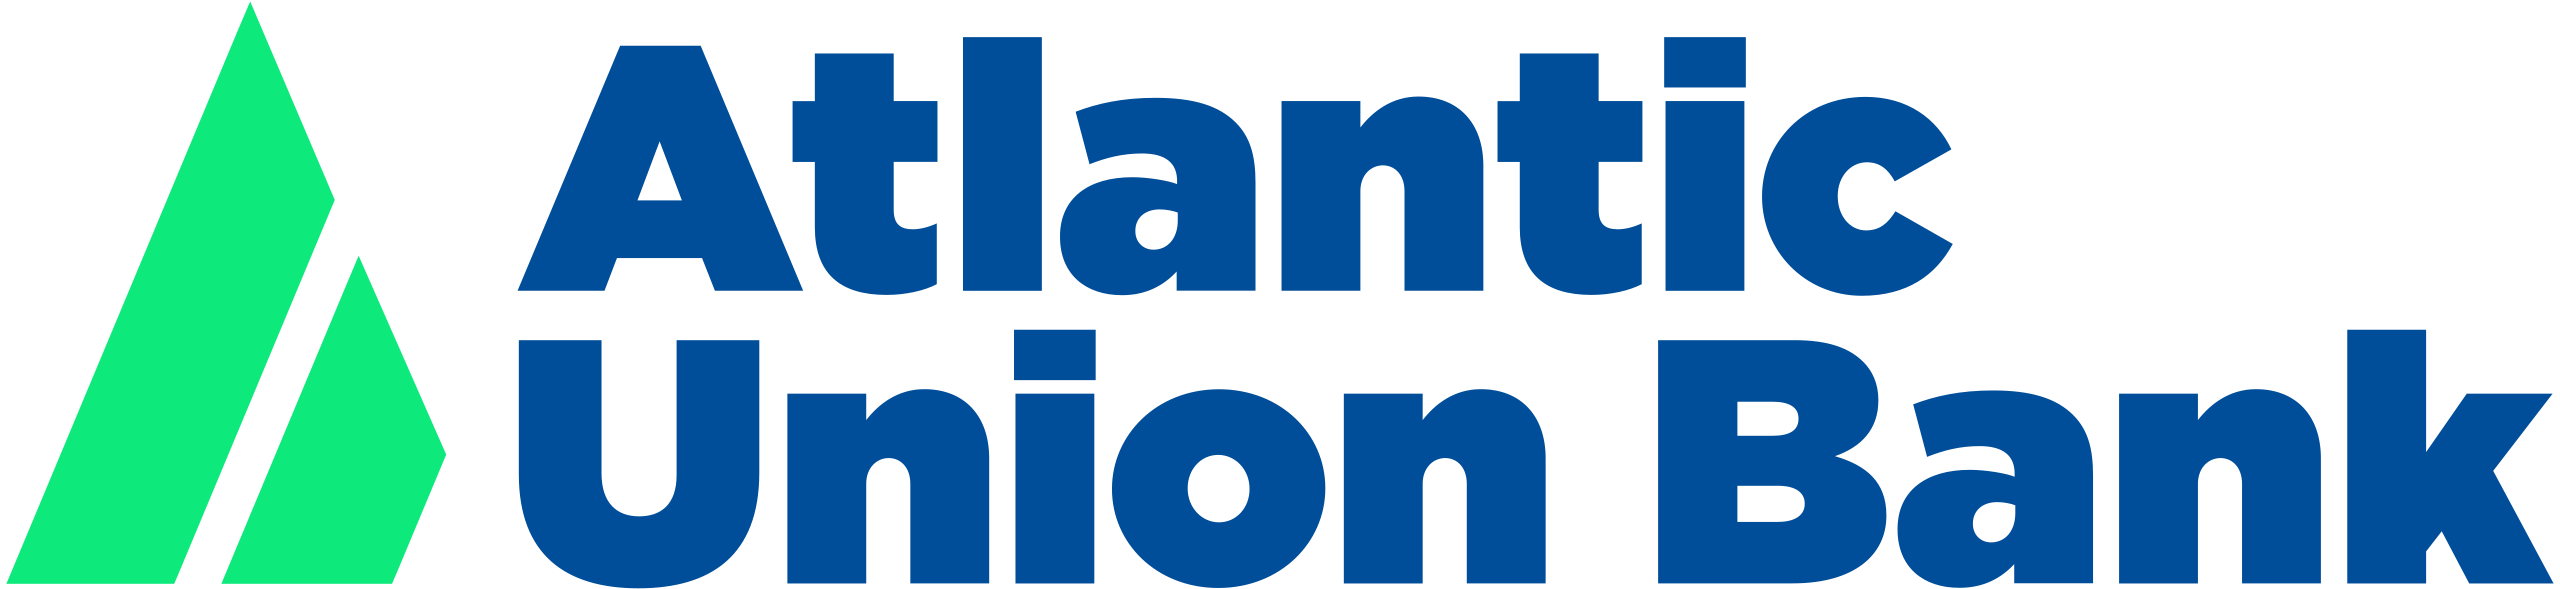 Union Bank Logo - Atlantic Union Bank logo.svg